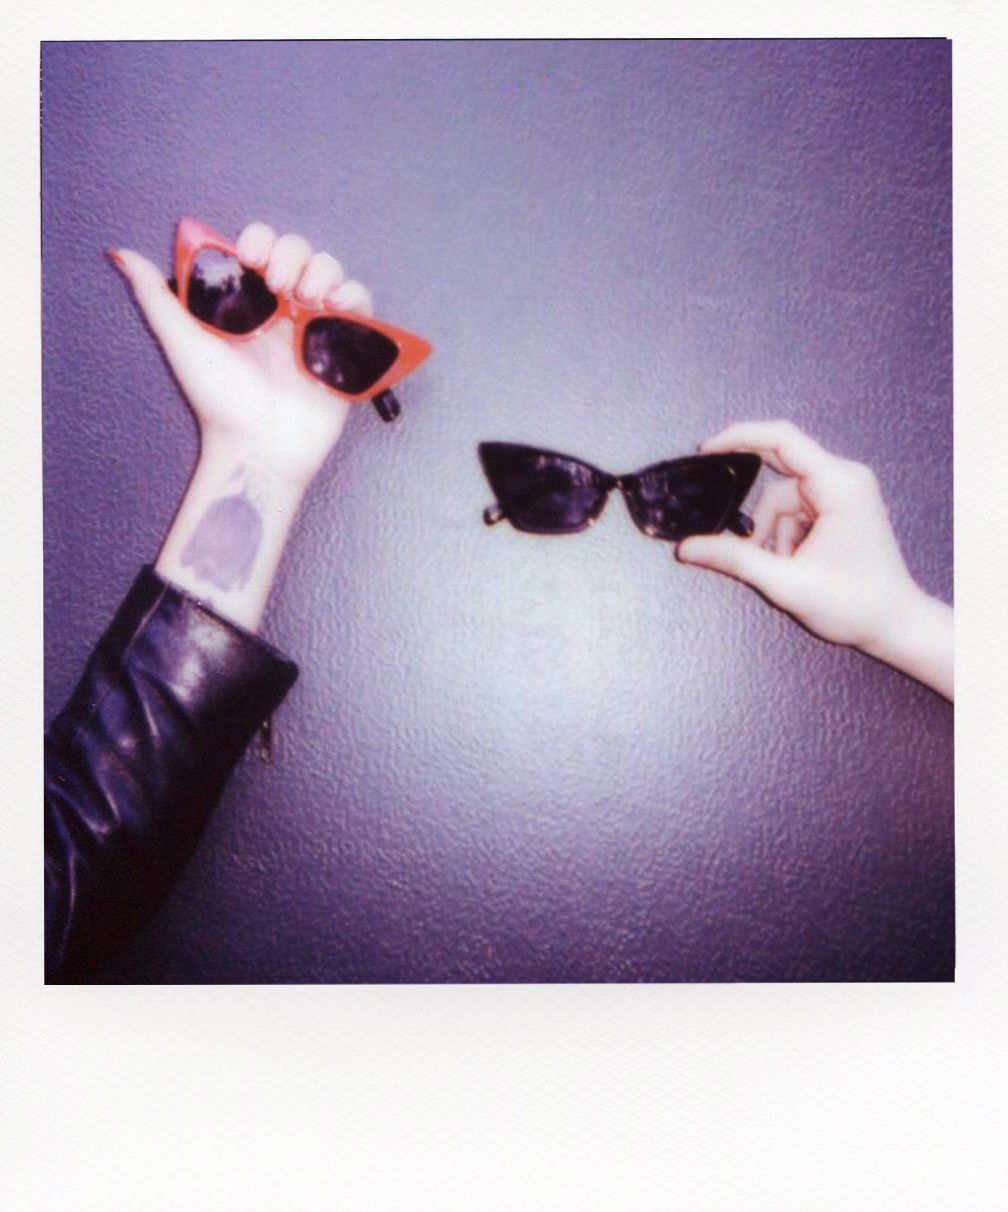 Two hands holding Evil Eye Wear sunglasses